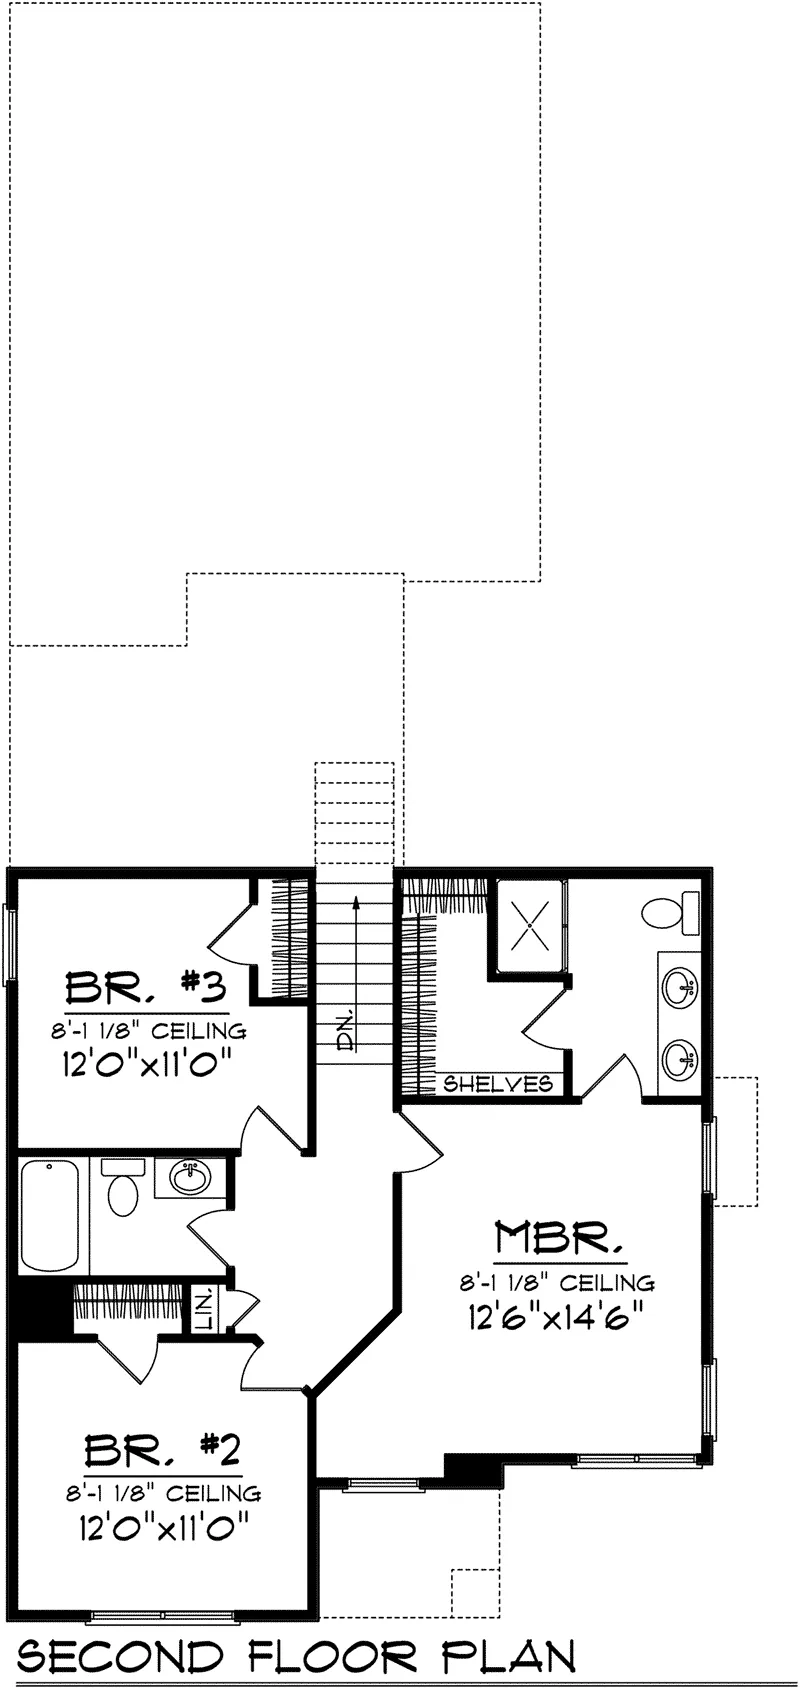 European House Plan Second Floor - Olwen English Tudor Home 051D-0903 - Shop House Plans and More